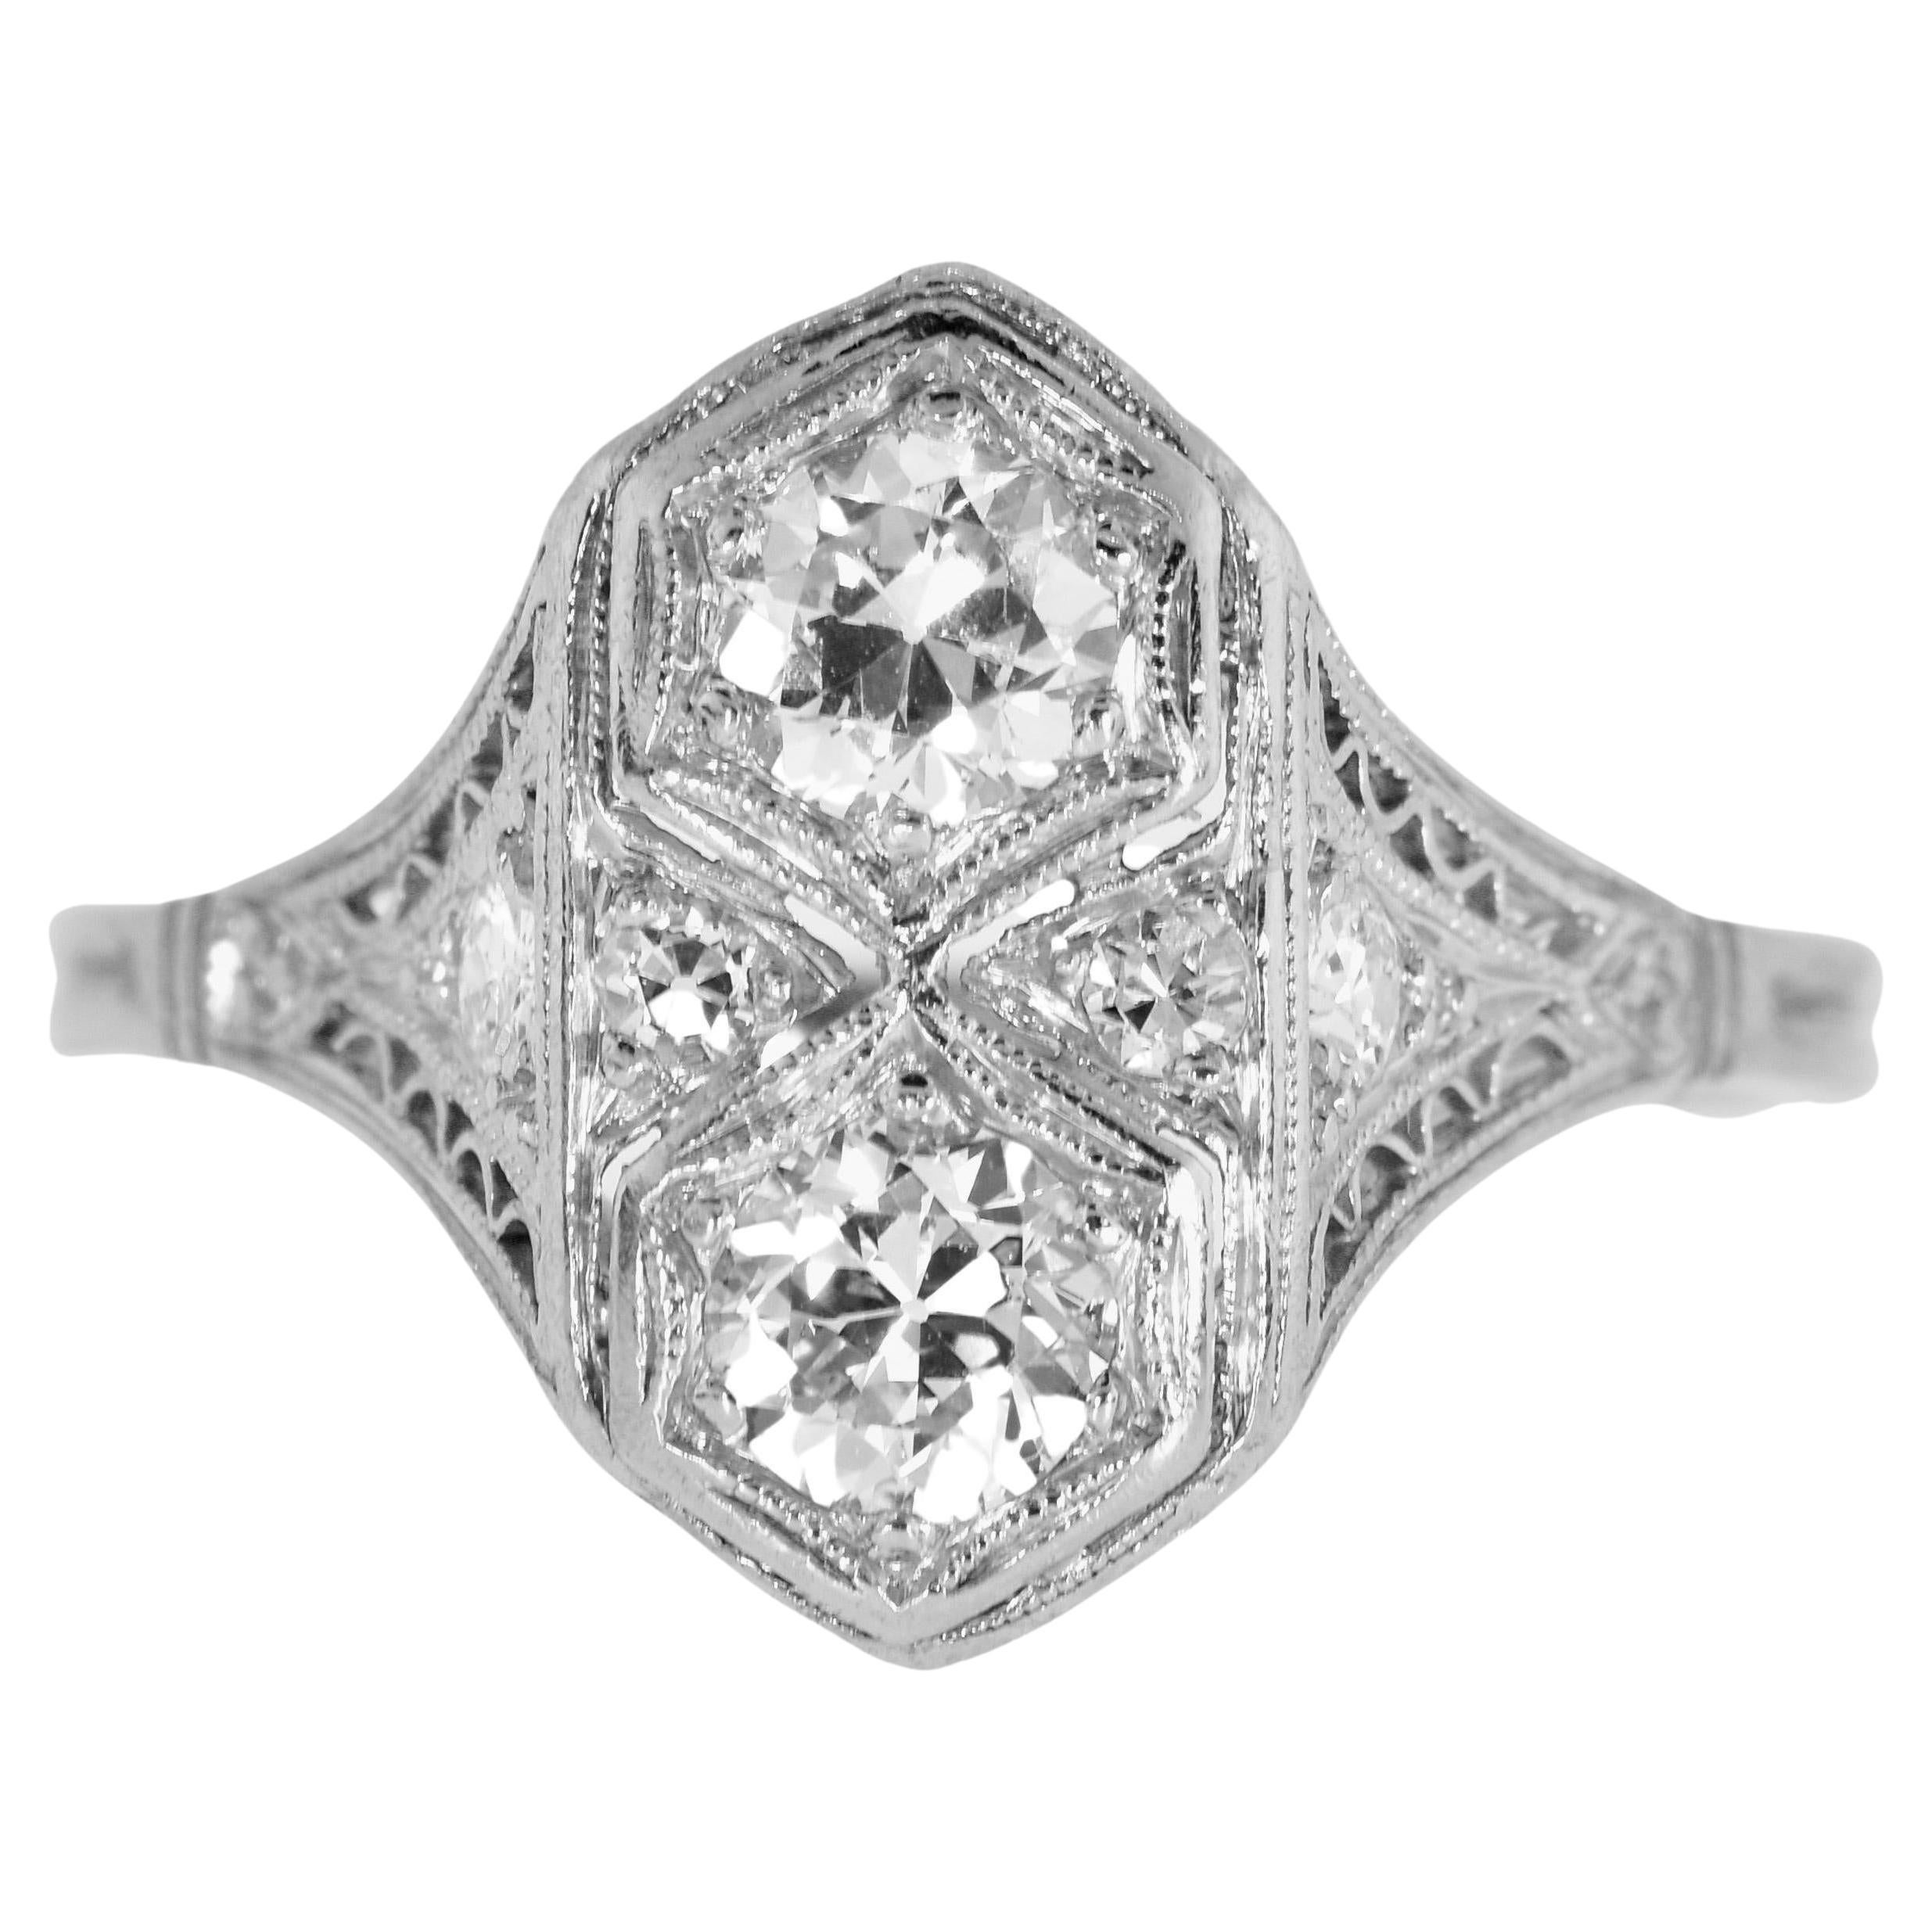 Antique Edwardian Platinum and Diamond Ring, c. 1915. For Sale